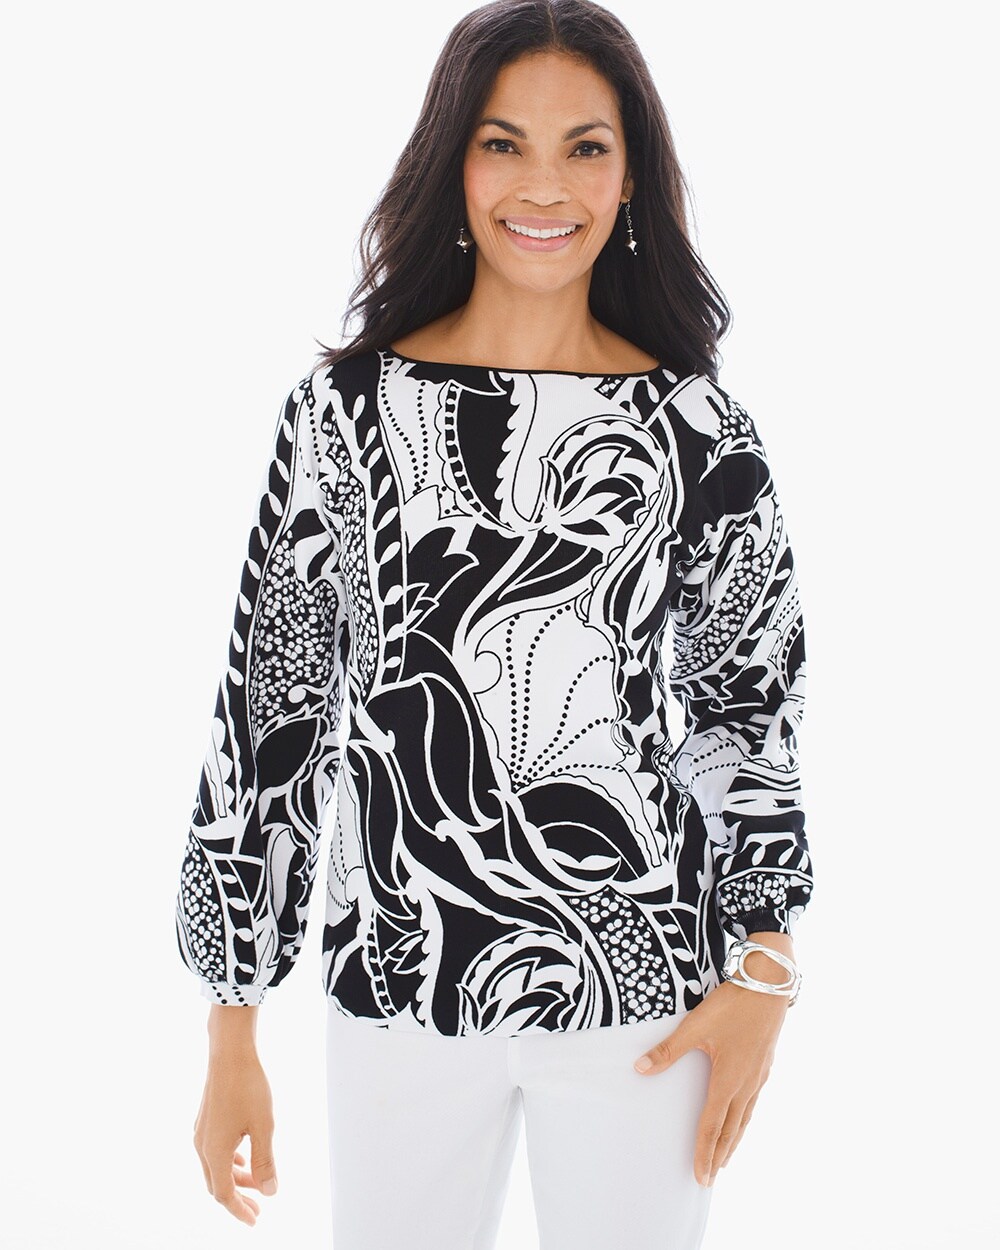 Black-and-White Printed Drama Sweater